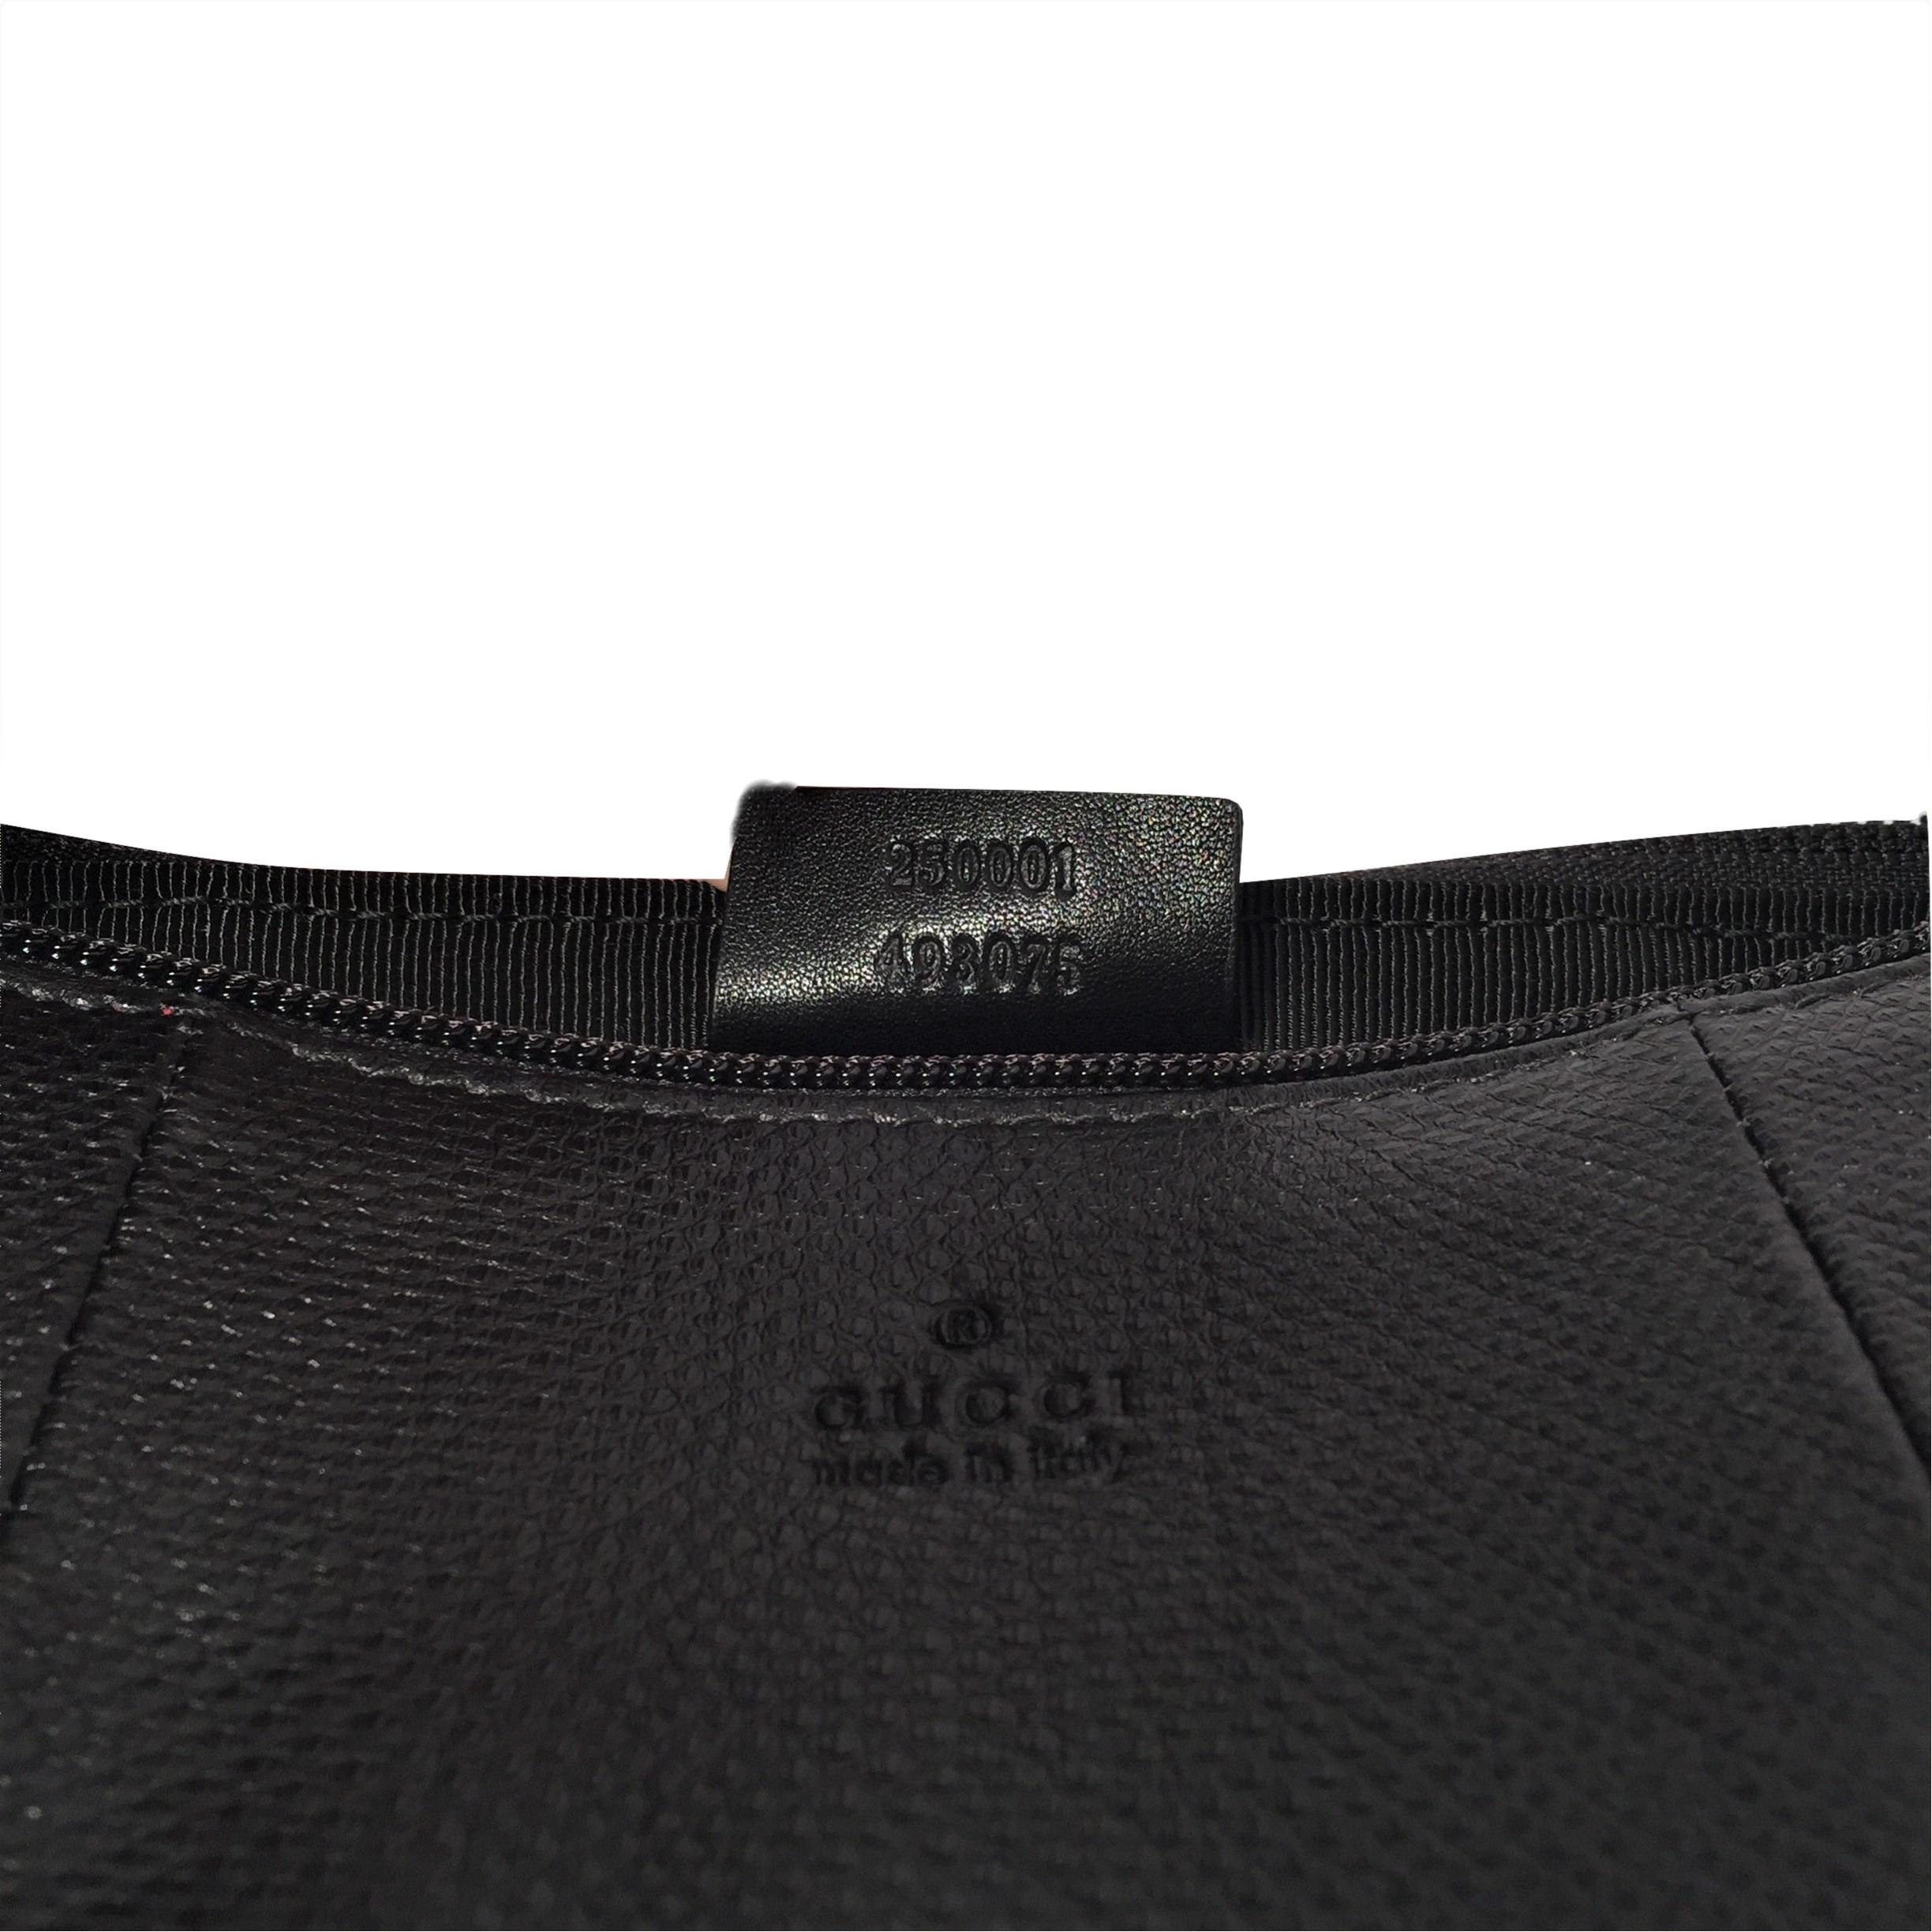 New Gucci Black Lizard Baguette Bag Purse 9